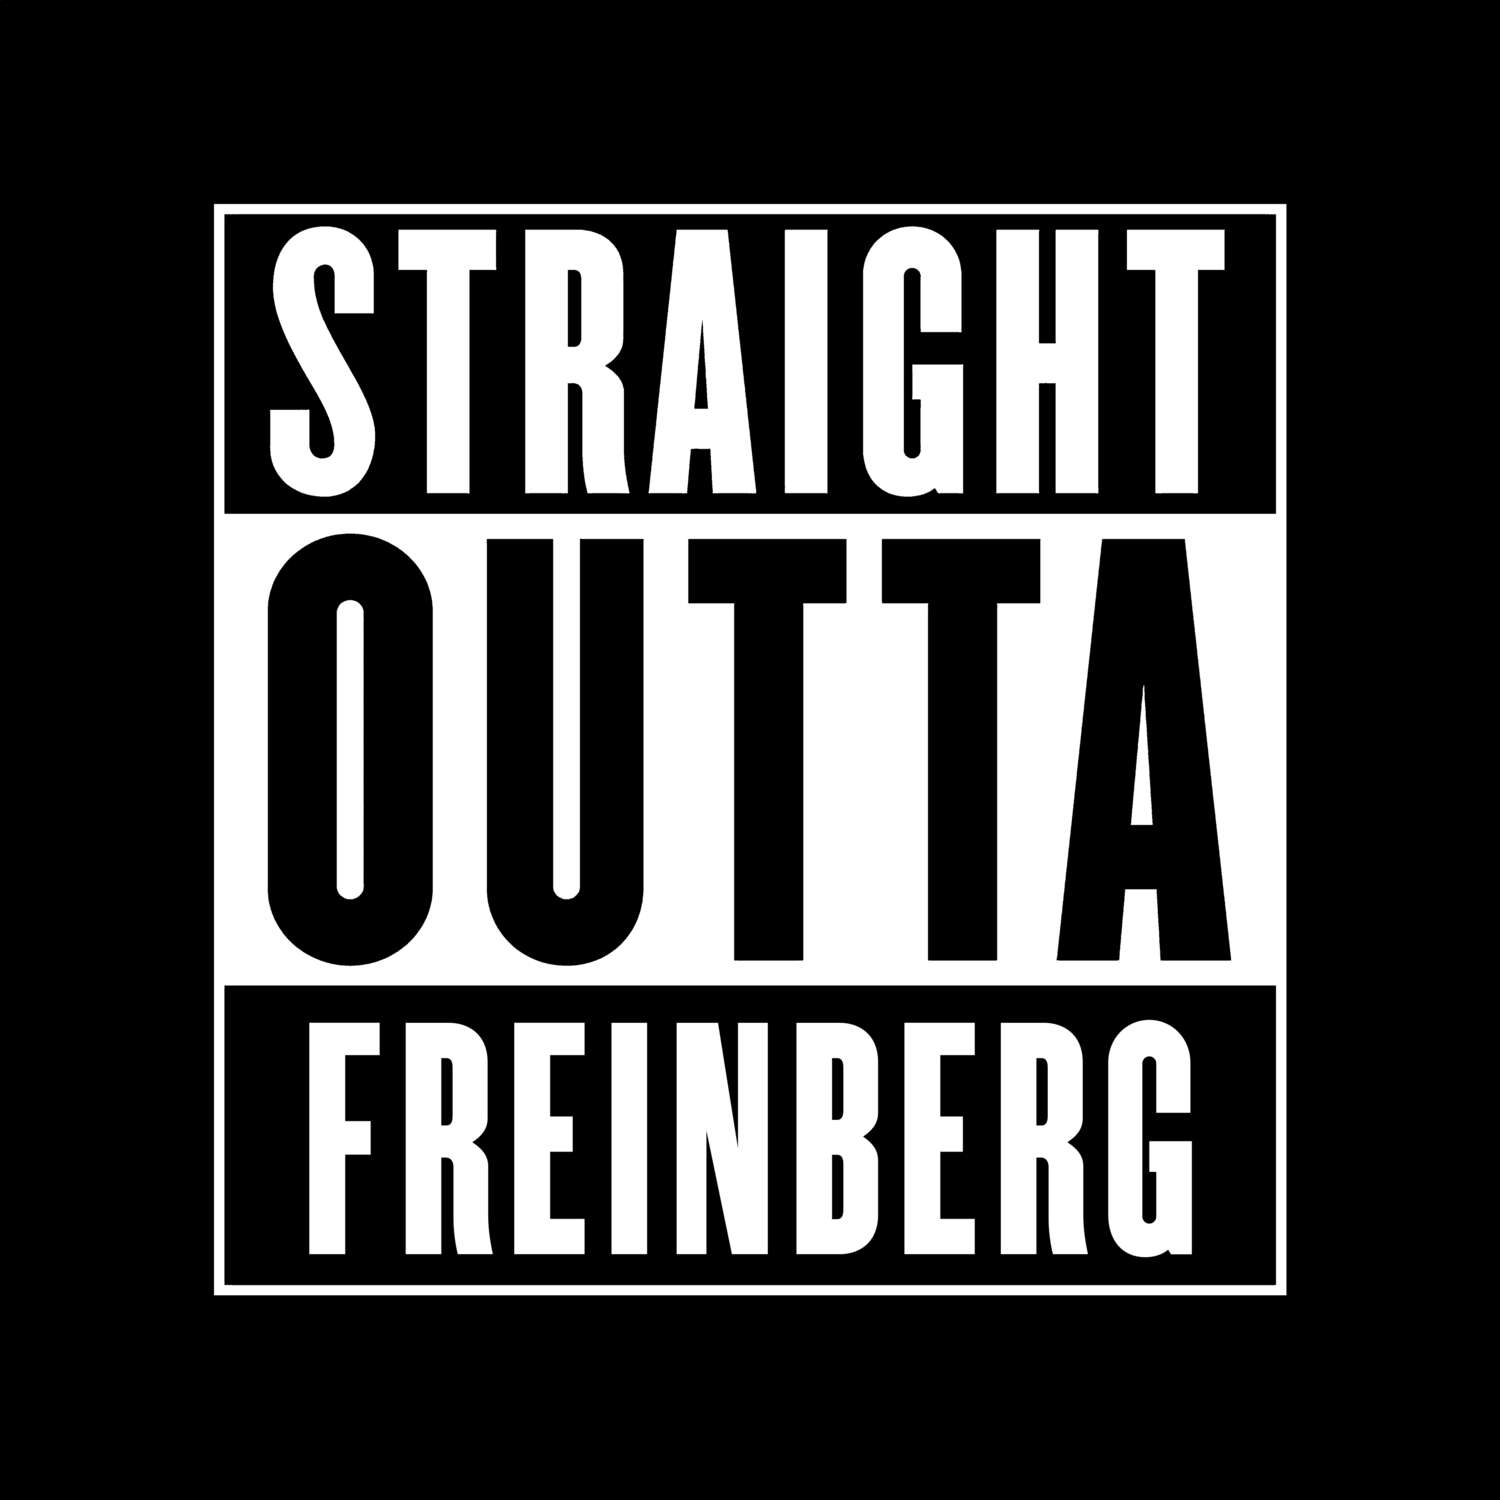 Freinberg T-Shirt »Straight Outta«